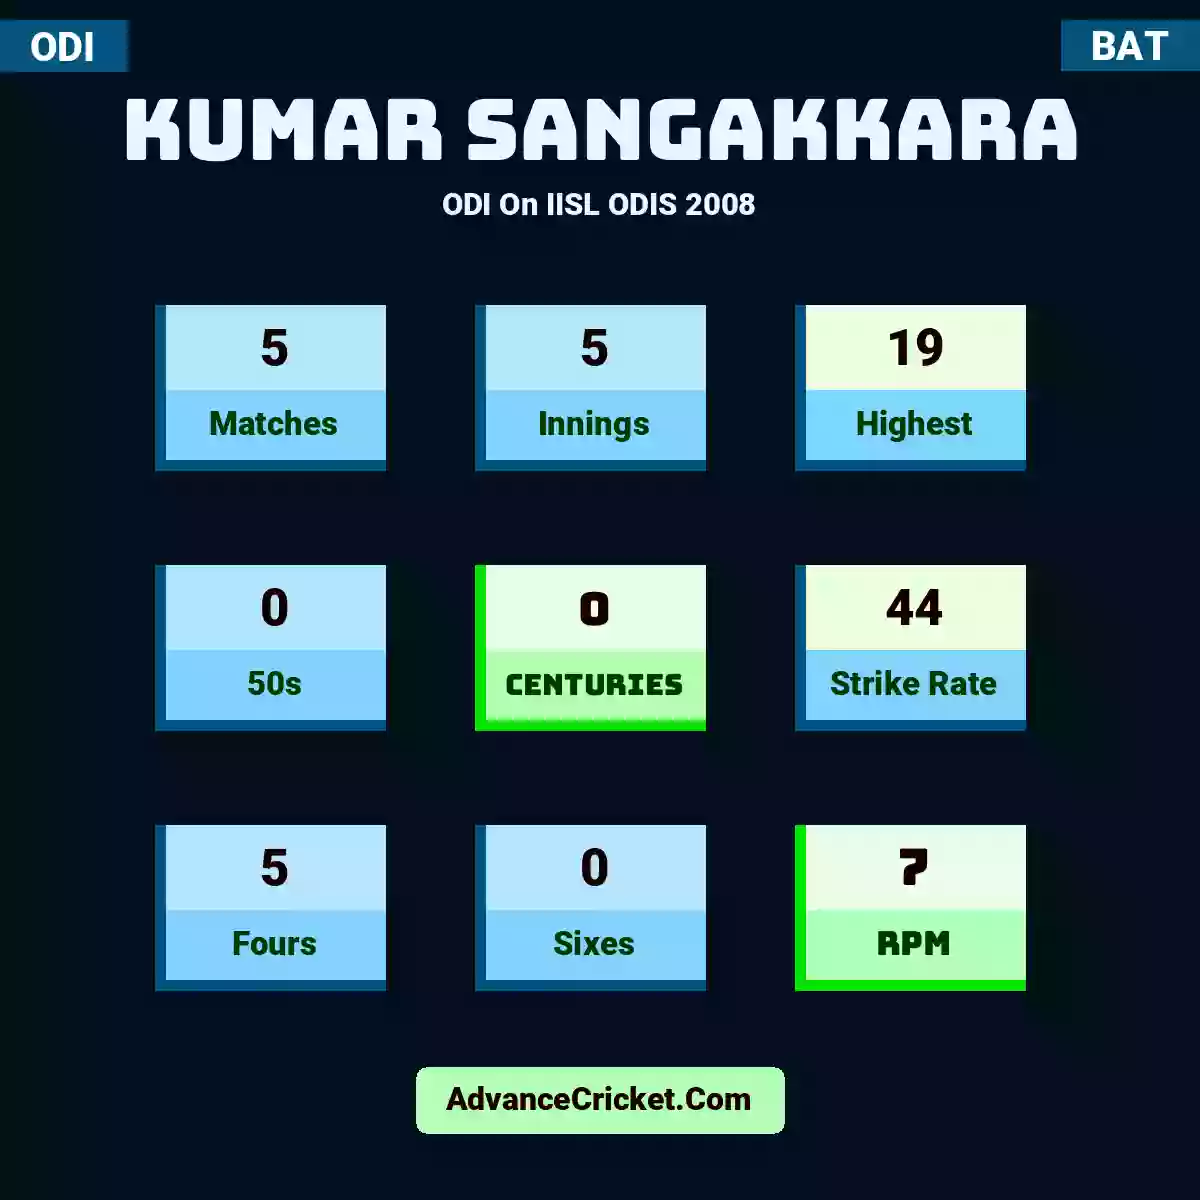 Kumar Sangakkara ODI  On IISL ODIS 2008, Kumar Sangakkara played 5 matches, scored 19 runs as highest, 0 half-centuries, and 0 centuries, with a strike rate of 44. K.Sangakkara hit 5 fours and 0 sixes, with an RPM of 7.